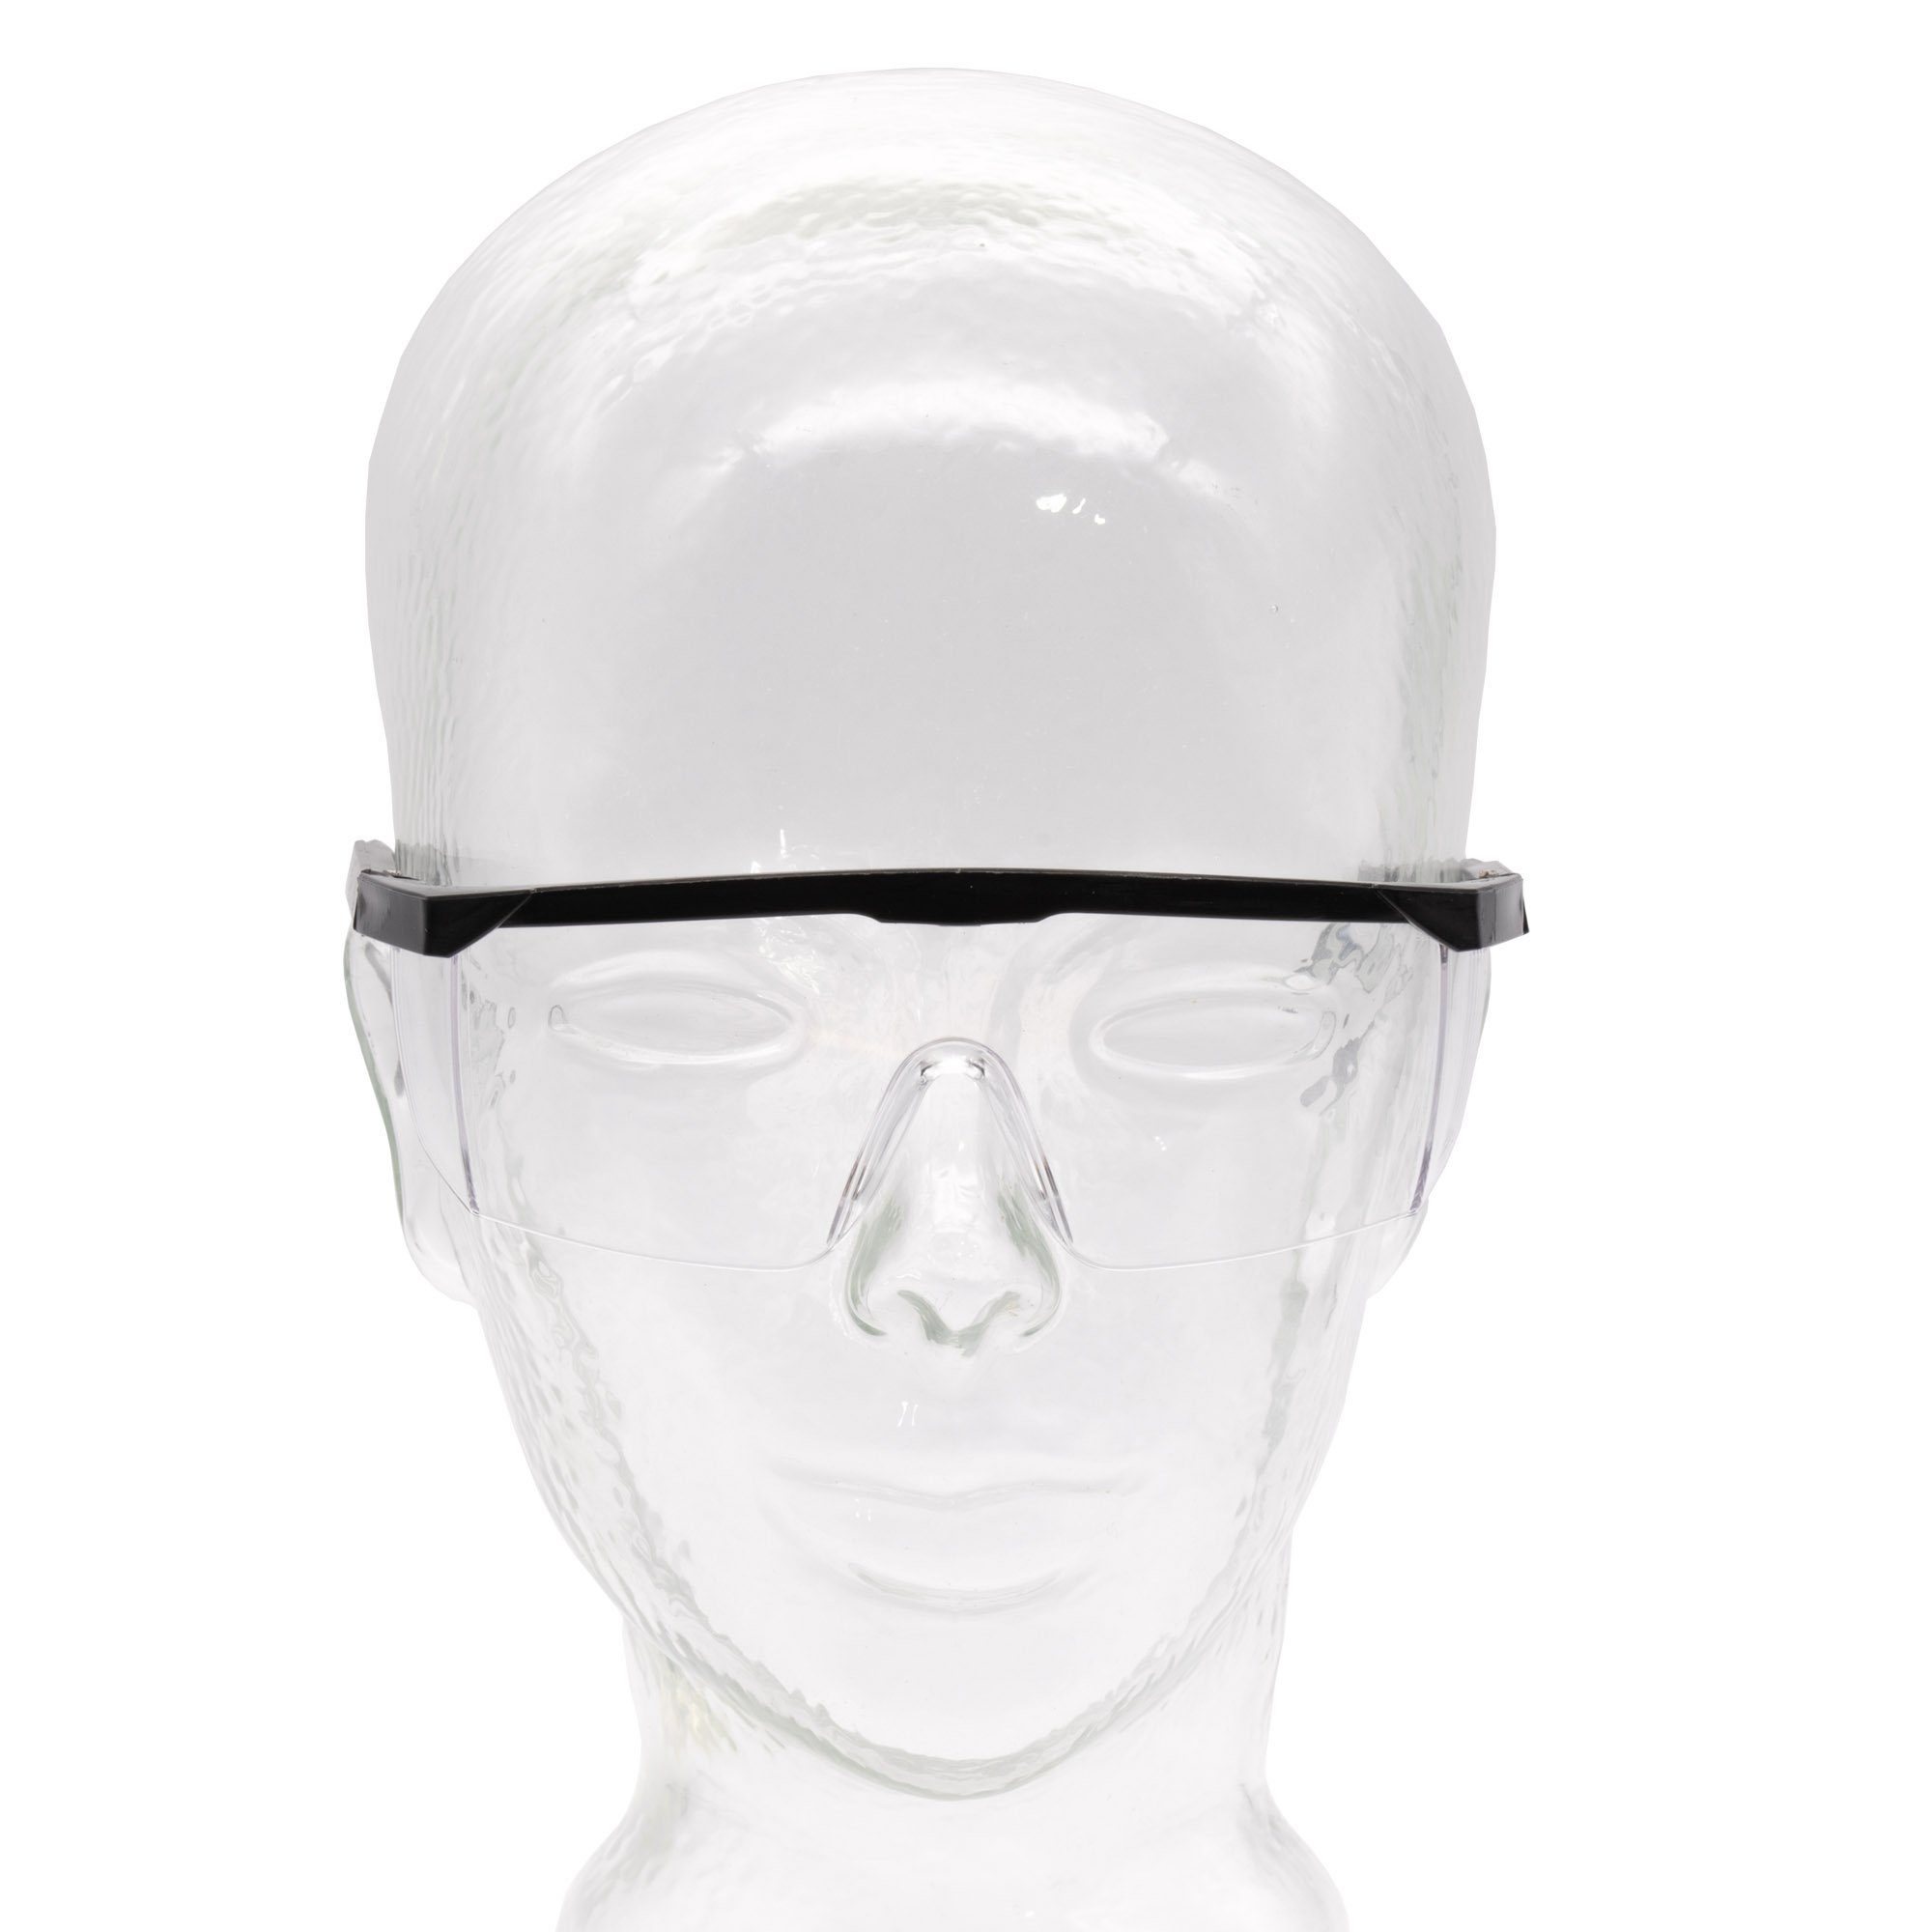 conkor Arbeitsschutzbrille Top, Arbeitsschutzbrille, Schutzbrille Sicherheitsbrille Augenschutz Arbeitsbrille